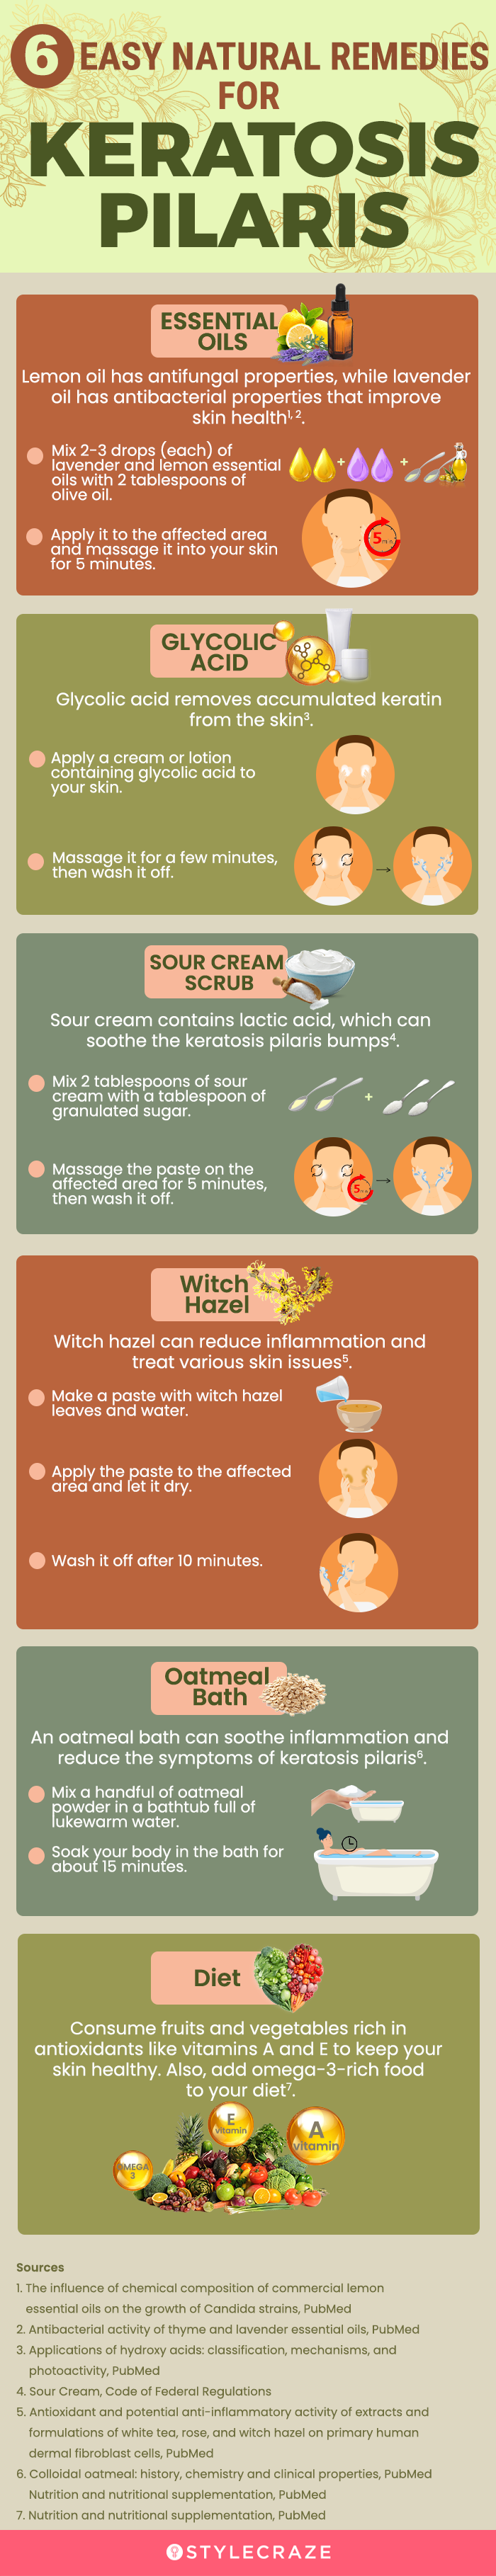 6 easy natural remedies for keratosis pilaris (infographic)